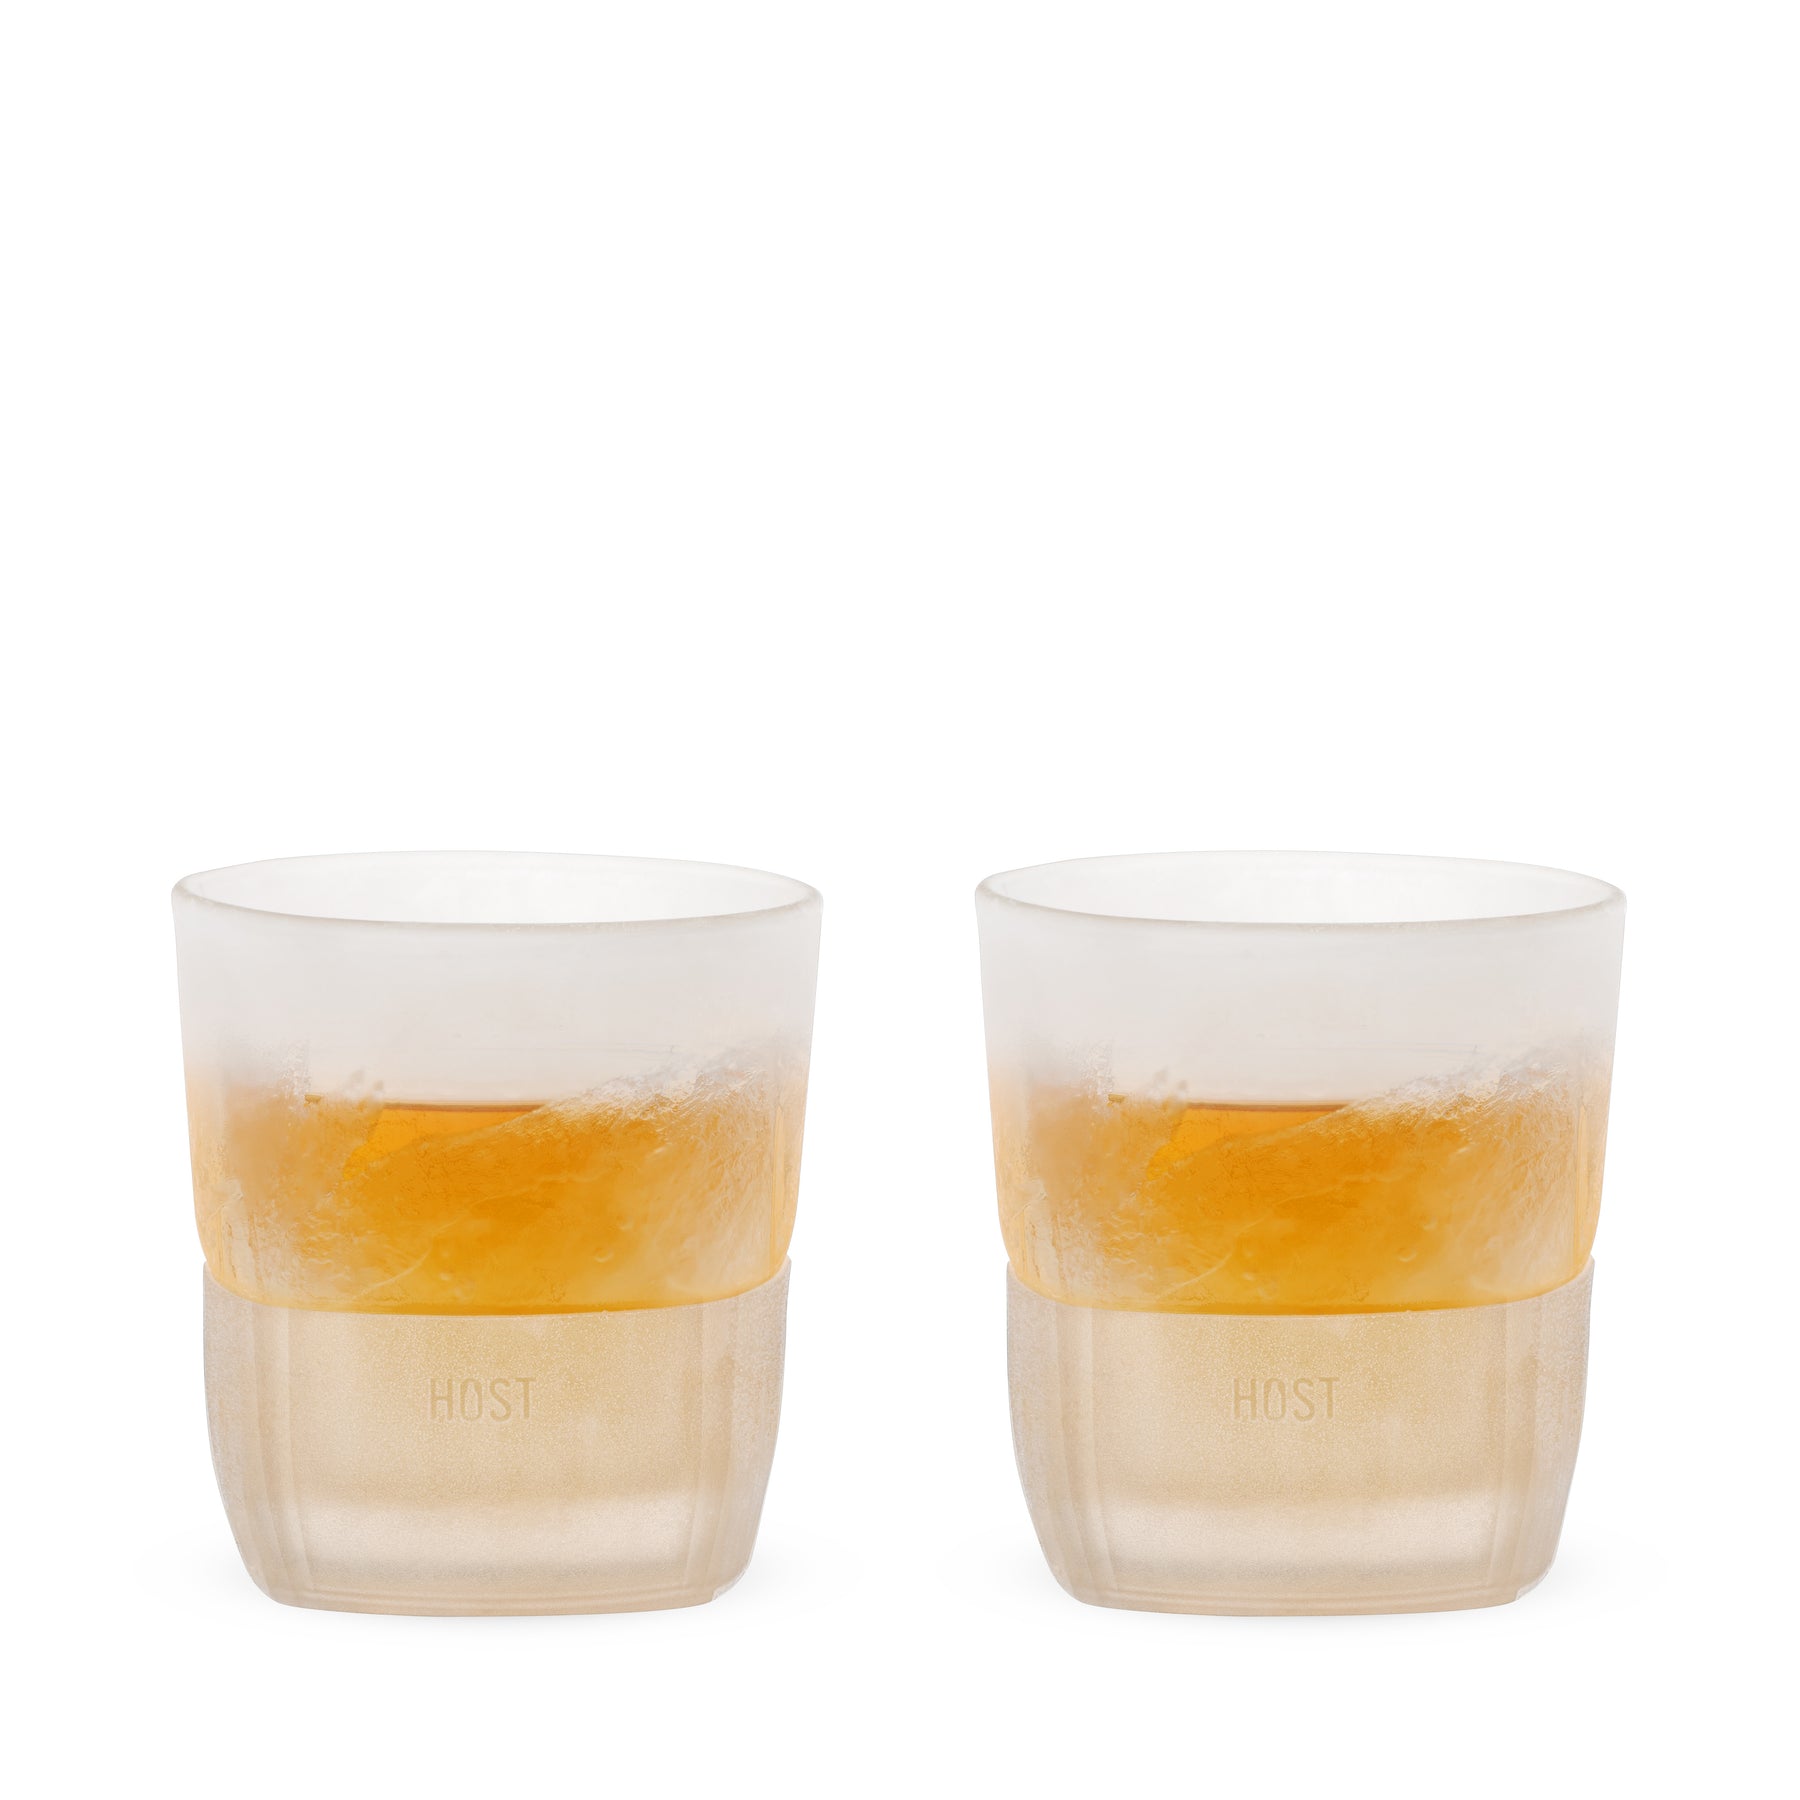 Cooler than Cool Glacier Margarita Glass (Set of 2) - The VinePair Store